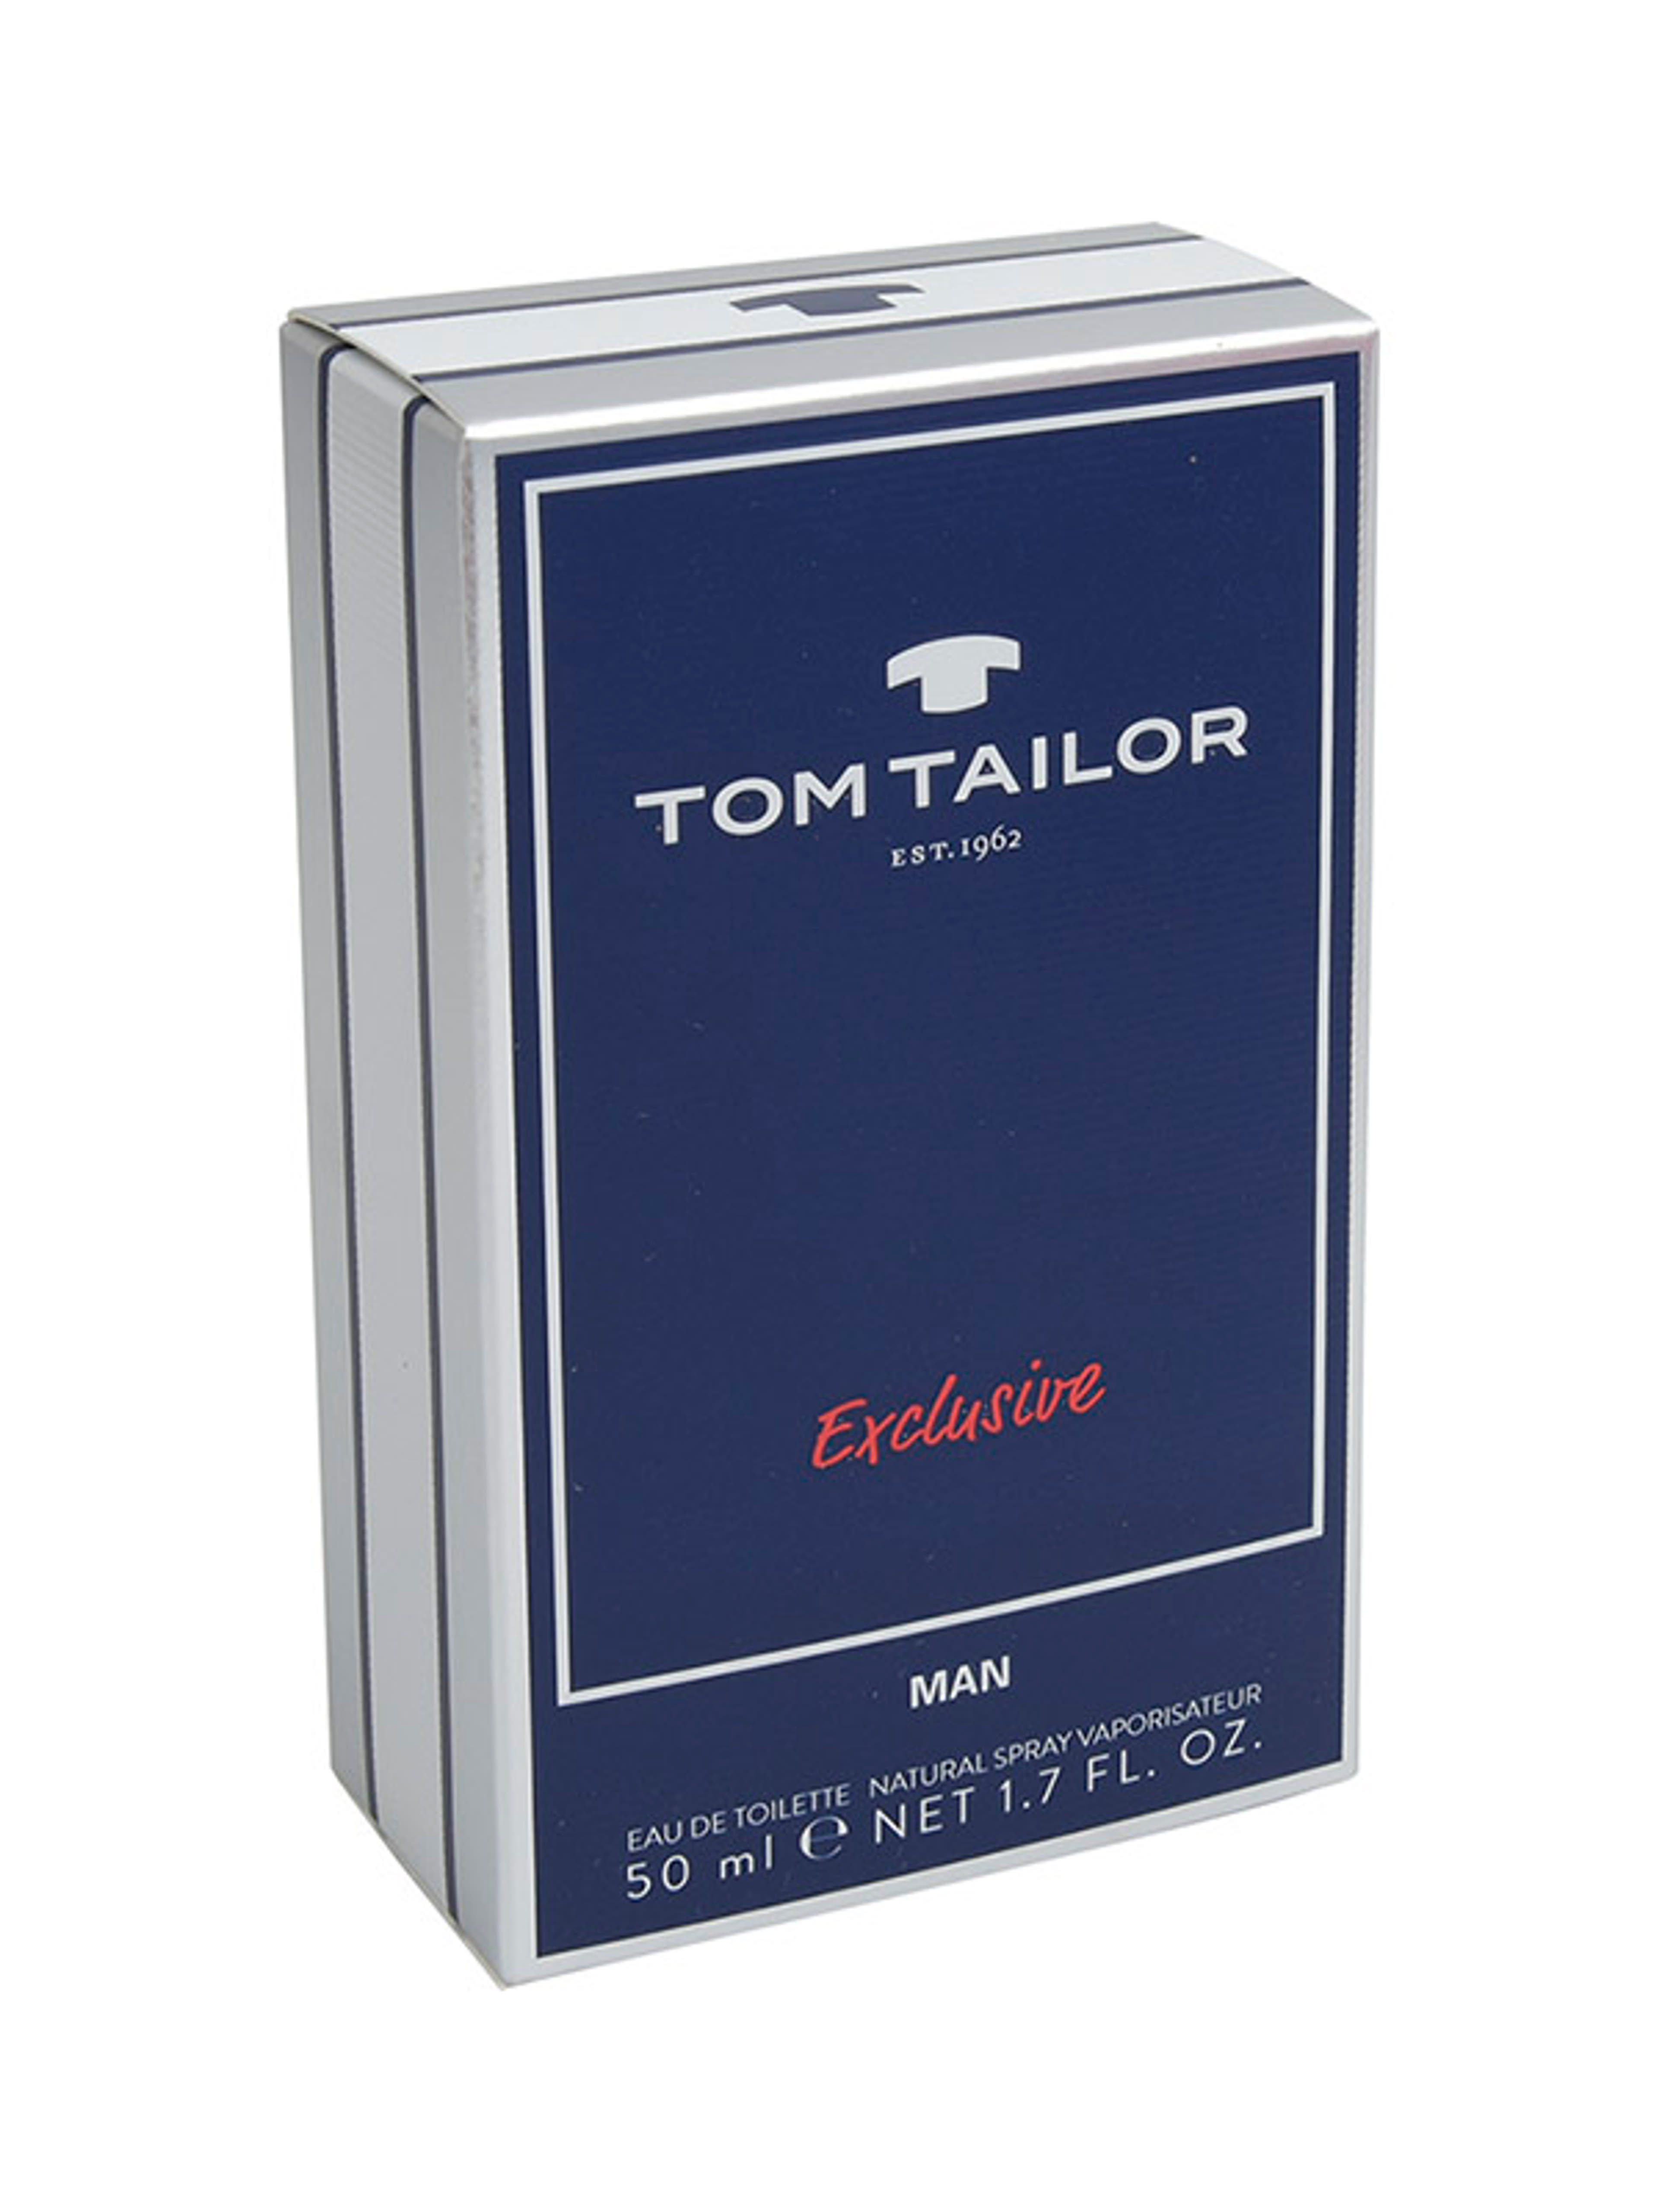 Tom Tailor Exclusive férfi Eau de Toilette - 50 ml-1